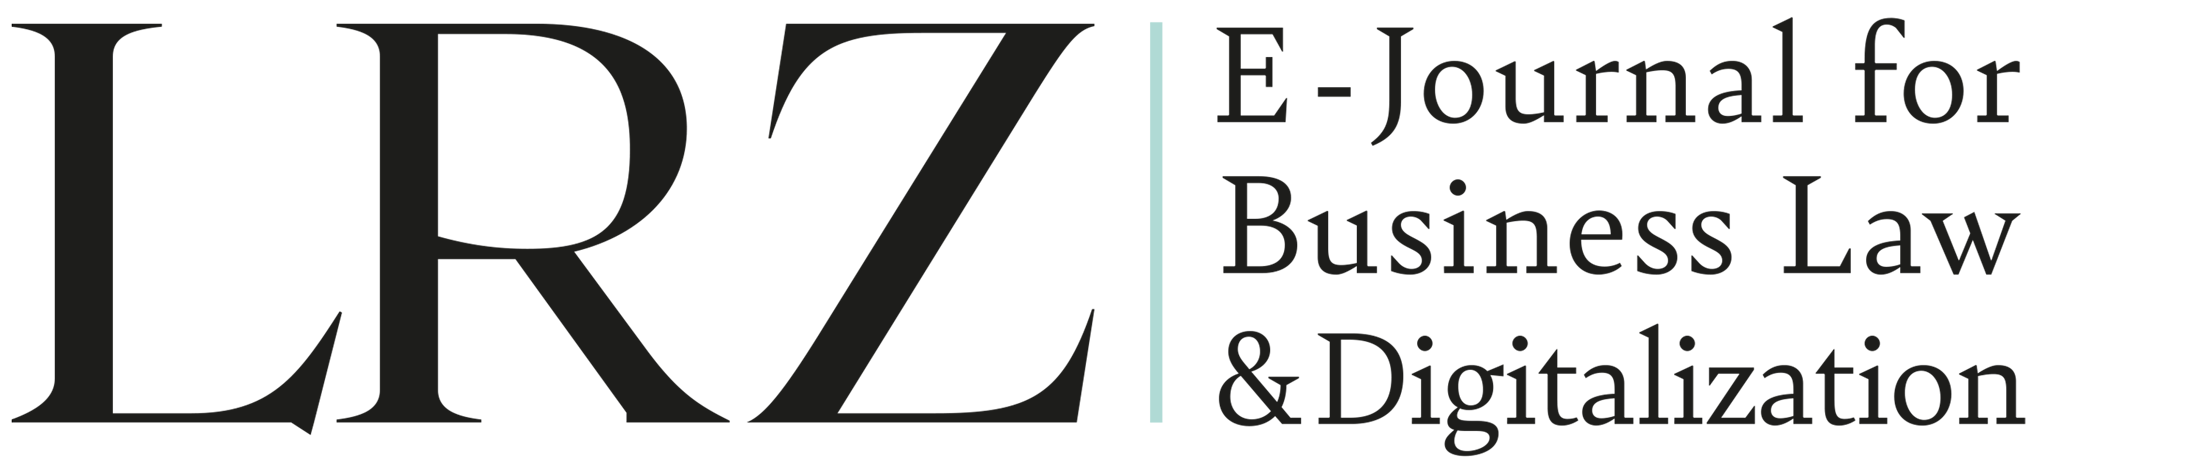 LRZ E Zeitschrift Logo